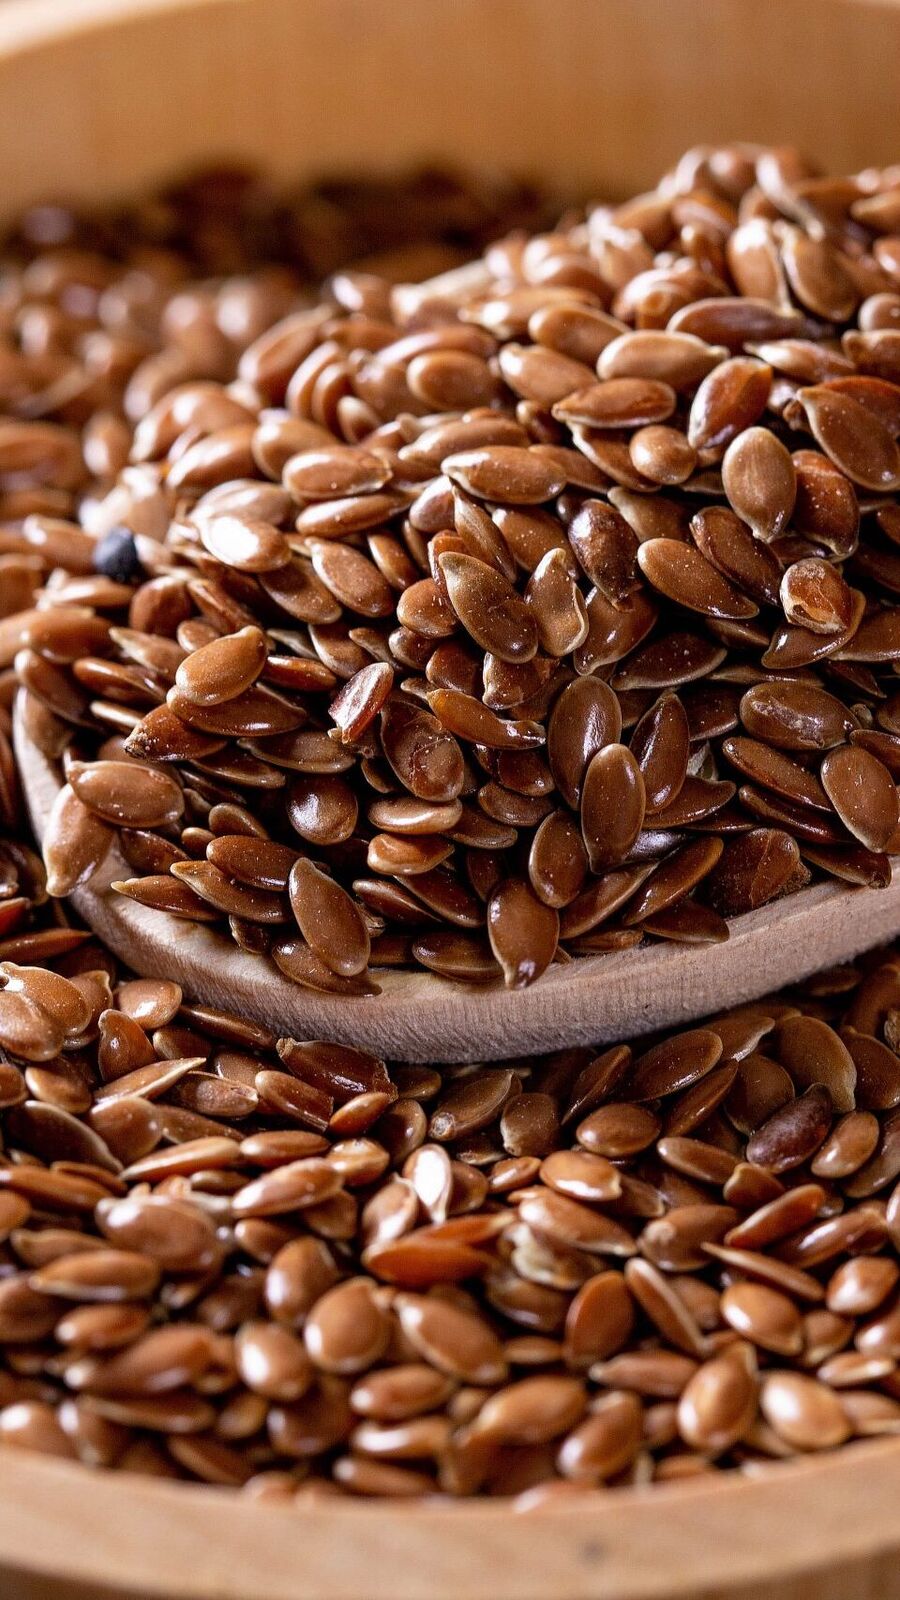 Flax Seeds Benefits: একাধিক পুষ্টিগুণে ভরপুর, এই পুজোয় কেন খাবেন ফ্ল্যাক্সসিডস